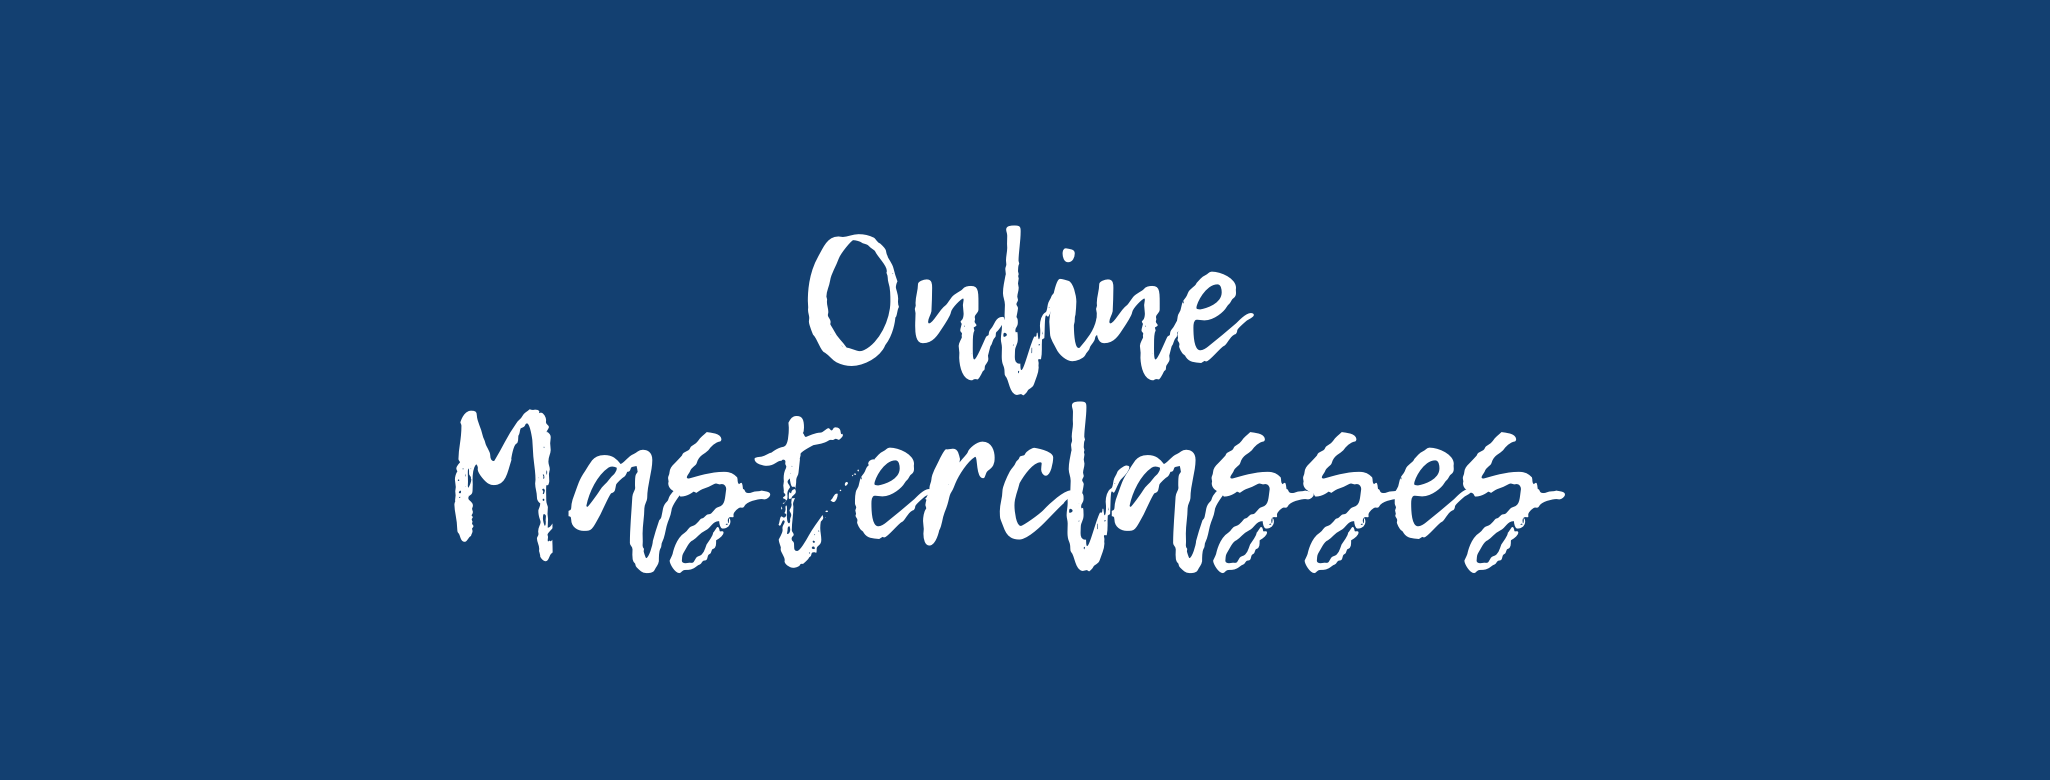 Online masterclasses